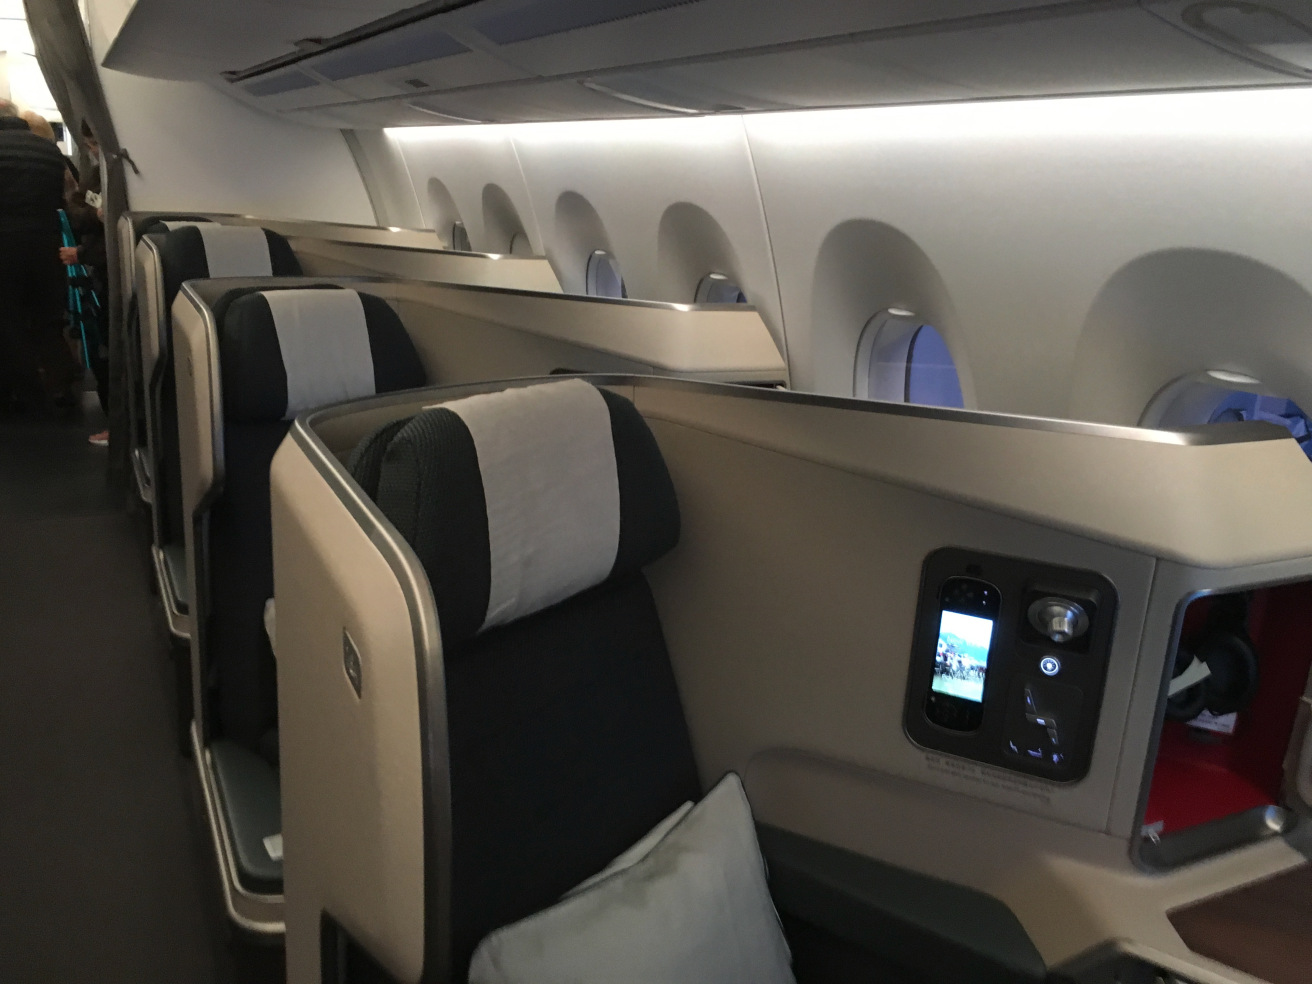 Airplane Pockets Airplane Seat Back Organizer & Storage for Personal I –  Passenger Shaming Merchandise